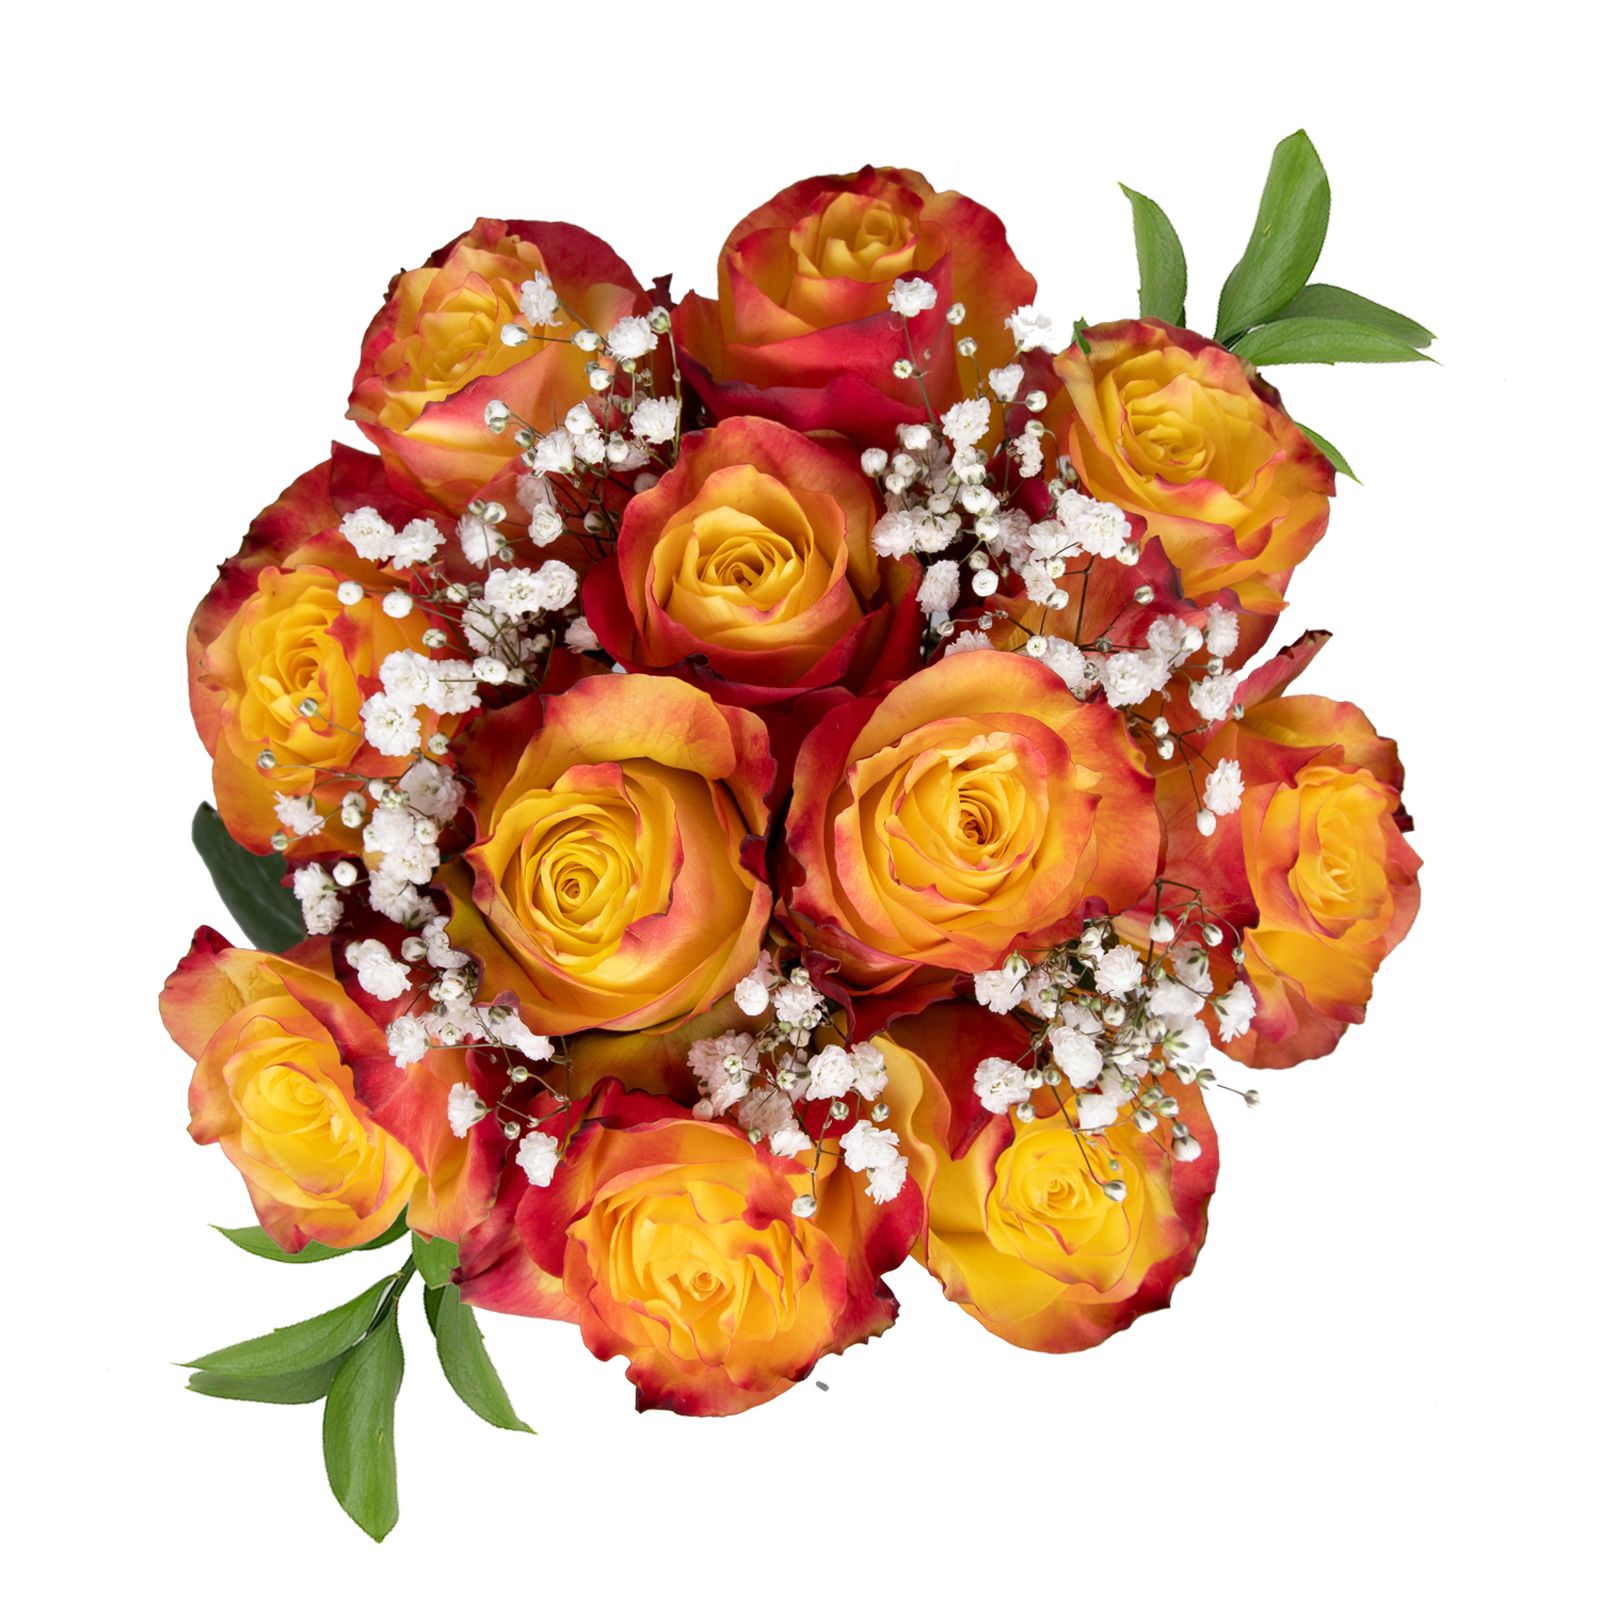 Rose Bouquets, 96 Stems - Assorted Bi-Color